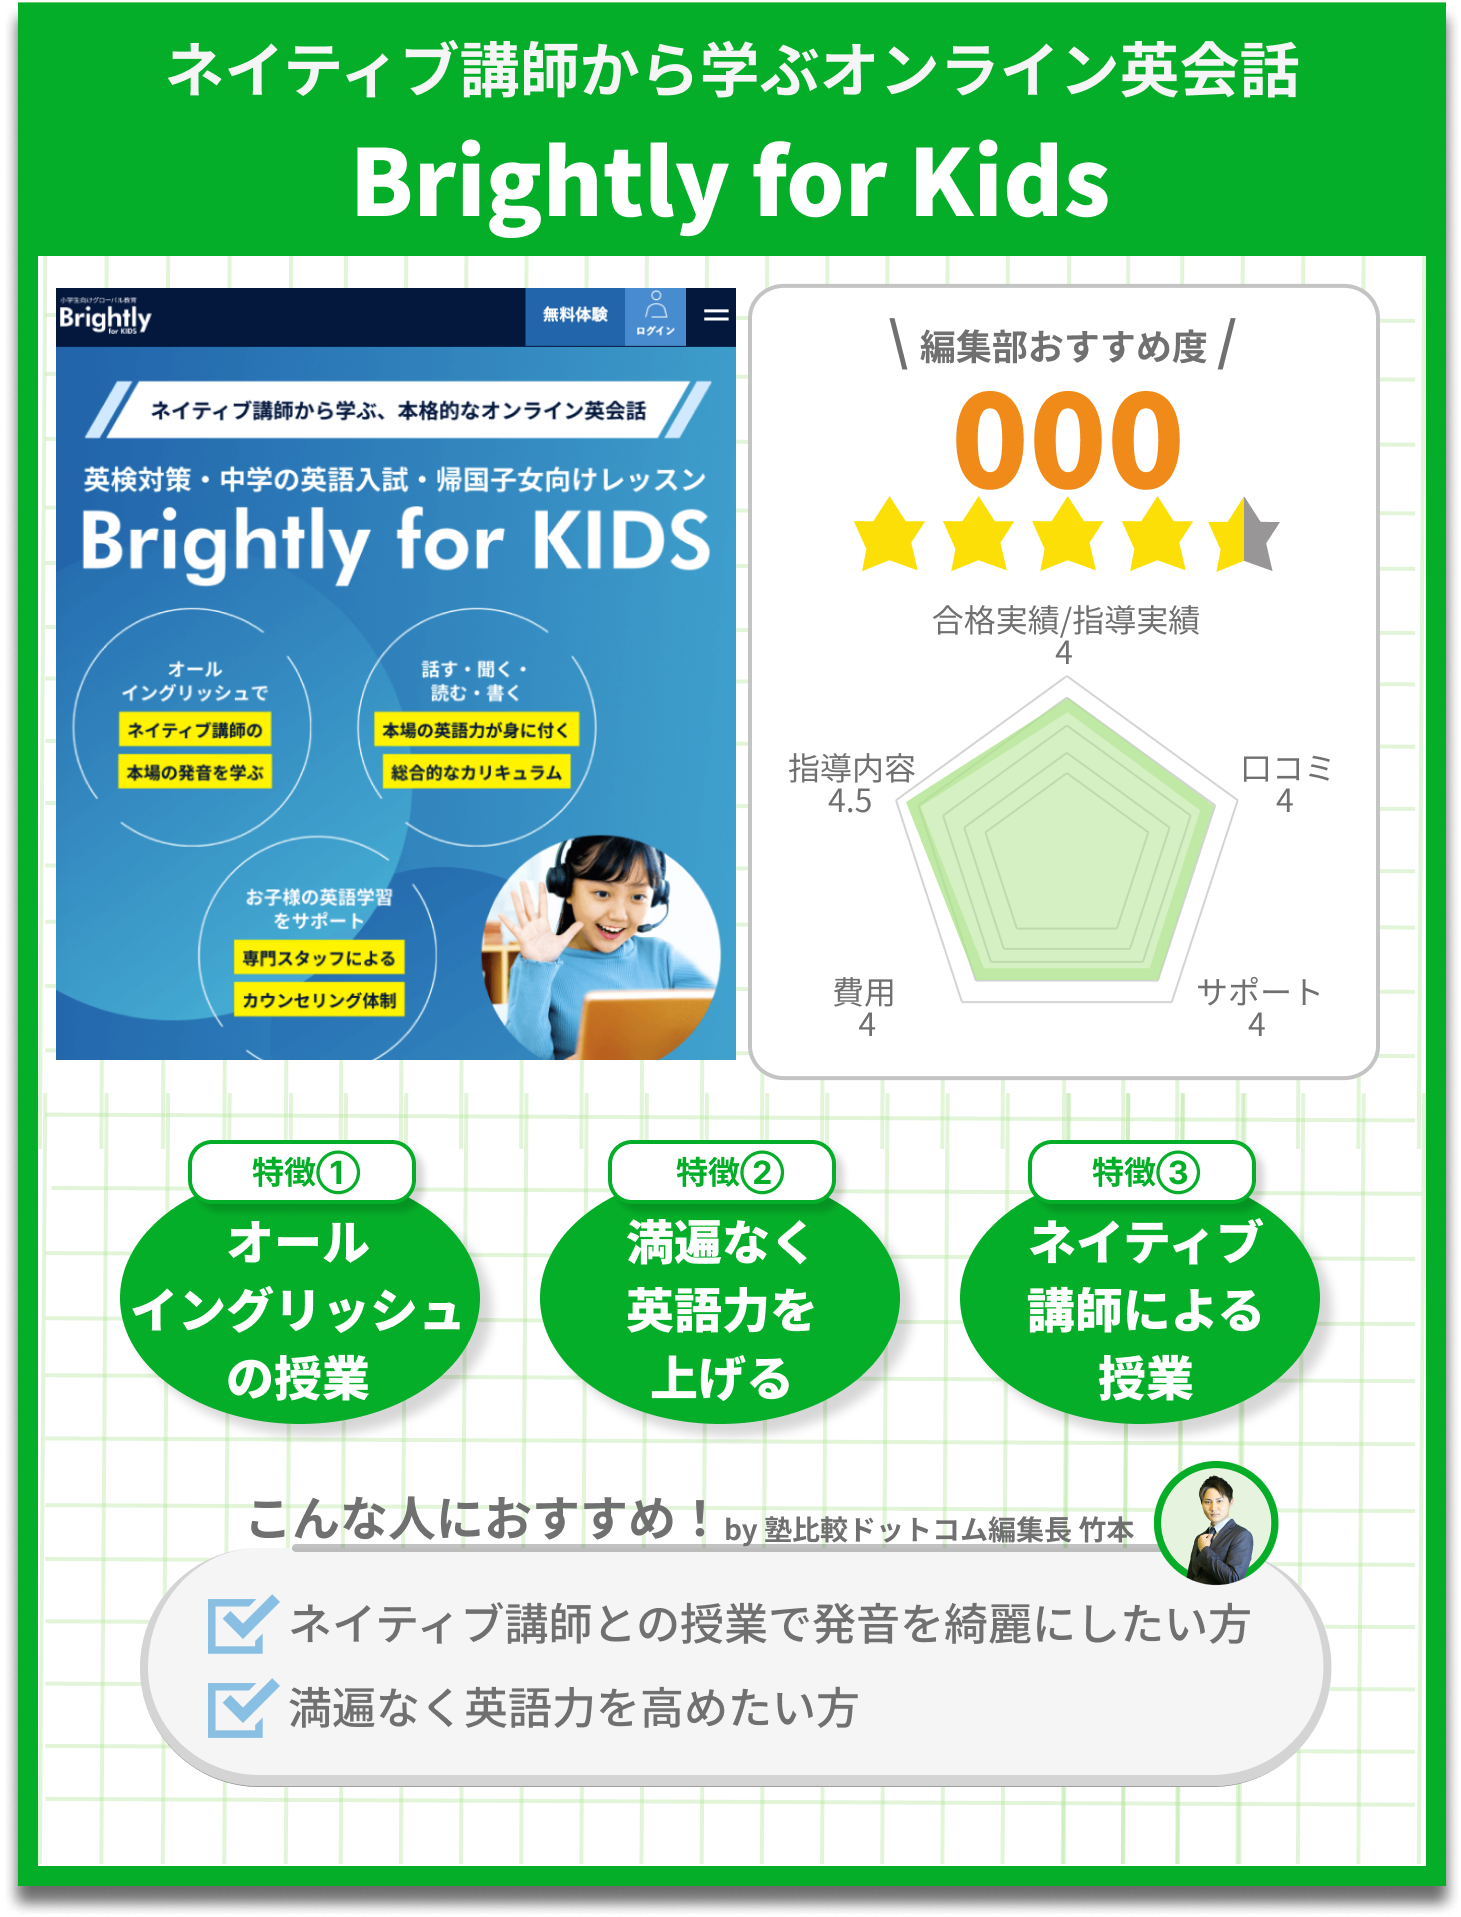 Brightly for kidsのサービス分析画像